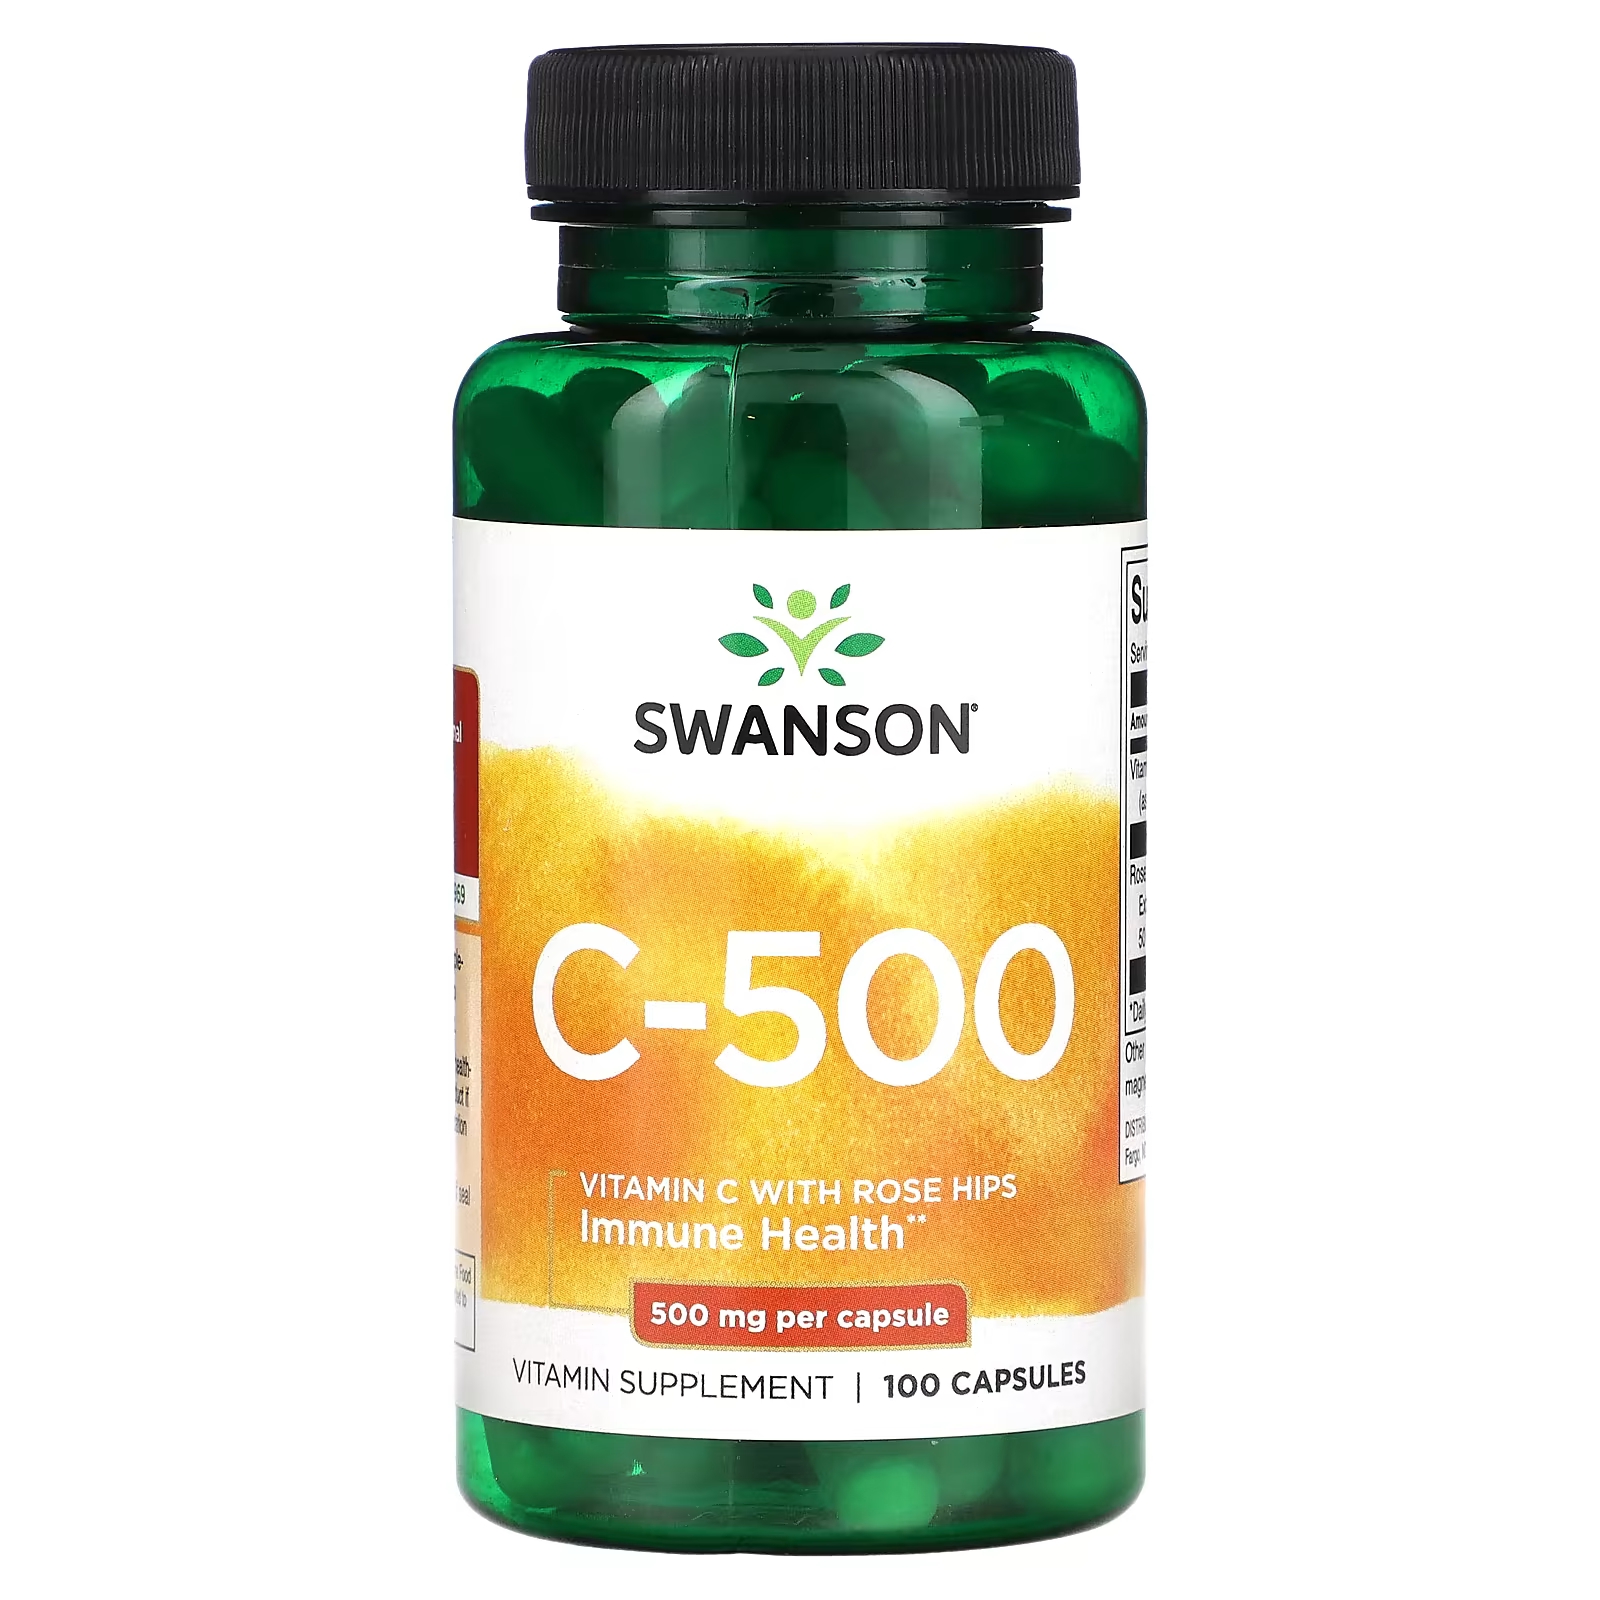 Витамин С Swanson C-500 с экстратком шиповника 500 мг, 100 капсул витамин с с плодами шиповника swanson 1000 мг 250 капсул